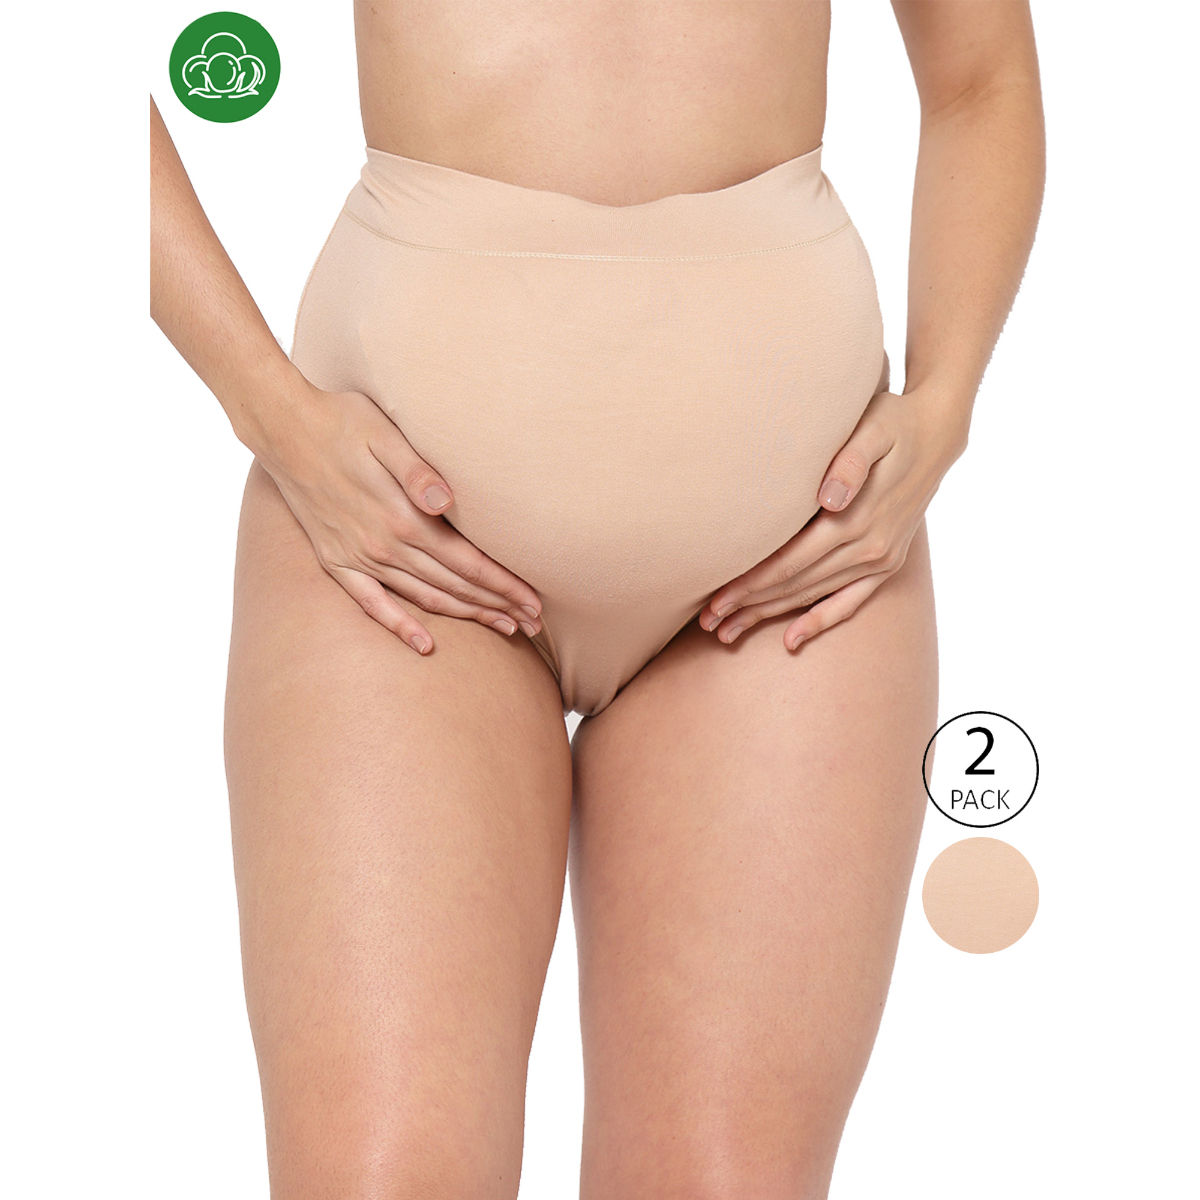 Buy Inner Sense Women's Organic Cotton Antimicrobial Boyshorts (Pack of 2)  - Nude online